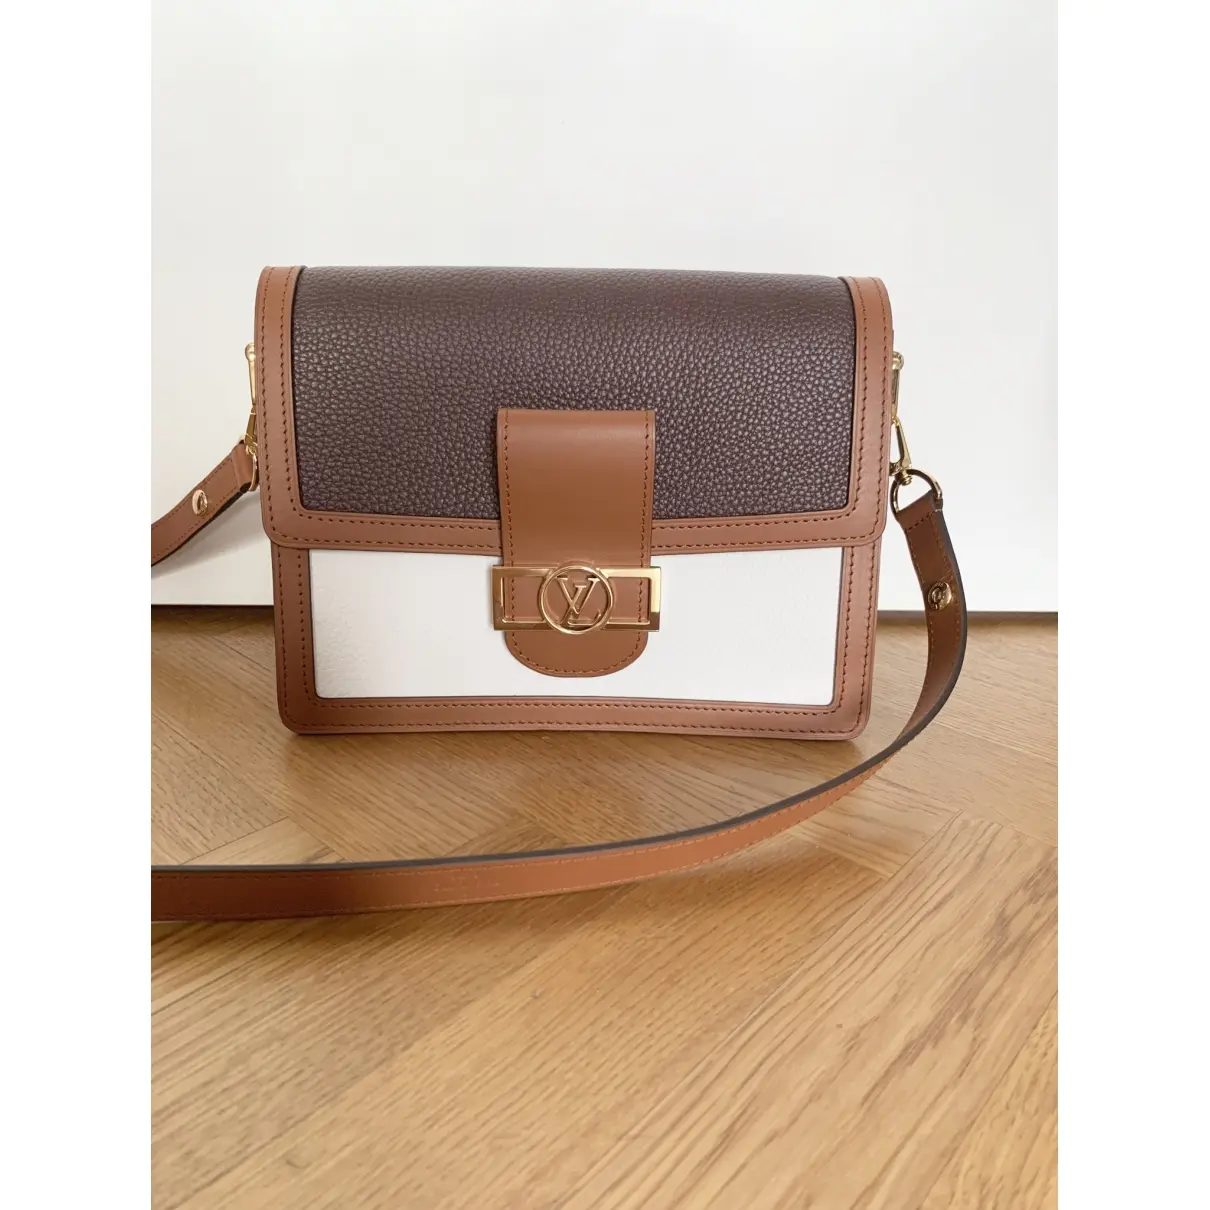 Buy Louis Vuitton Dauphine MM leather handbag online